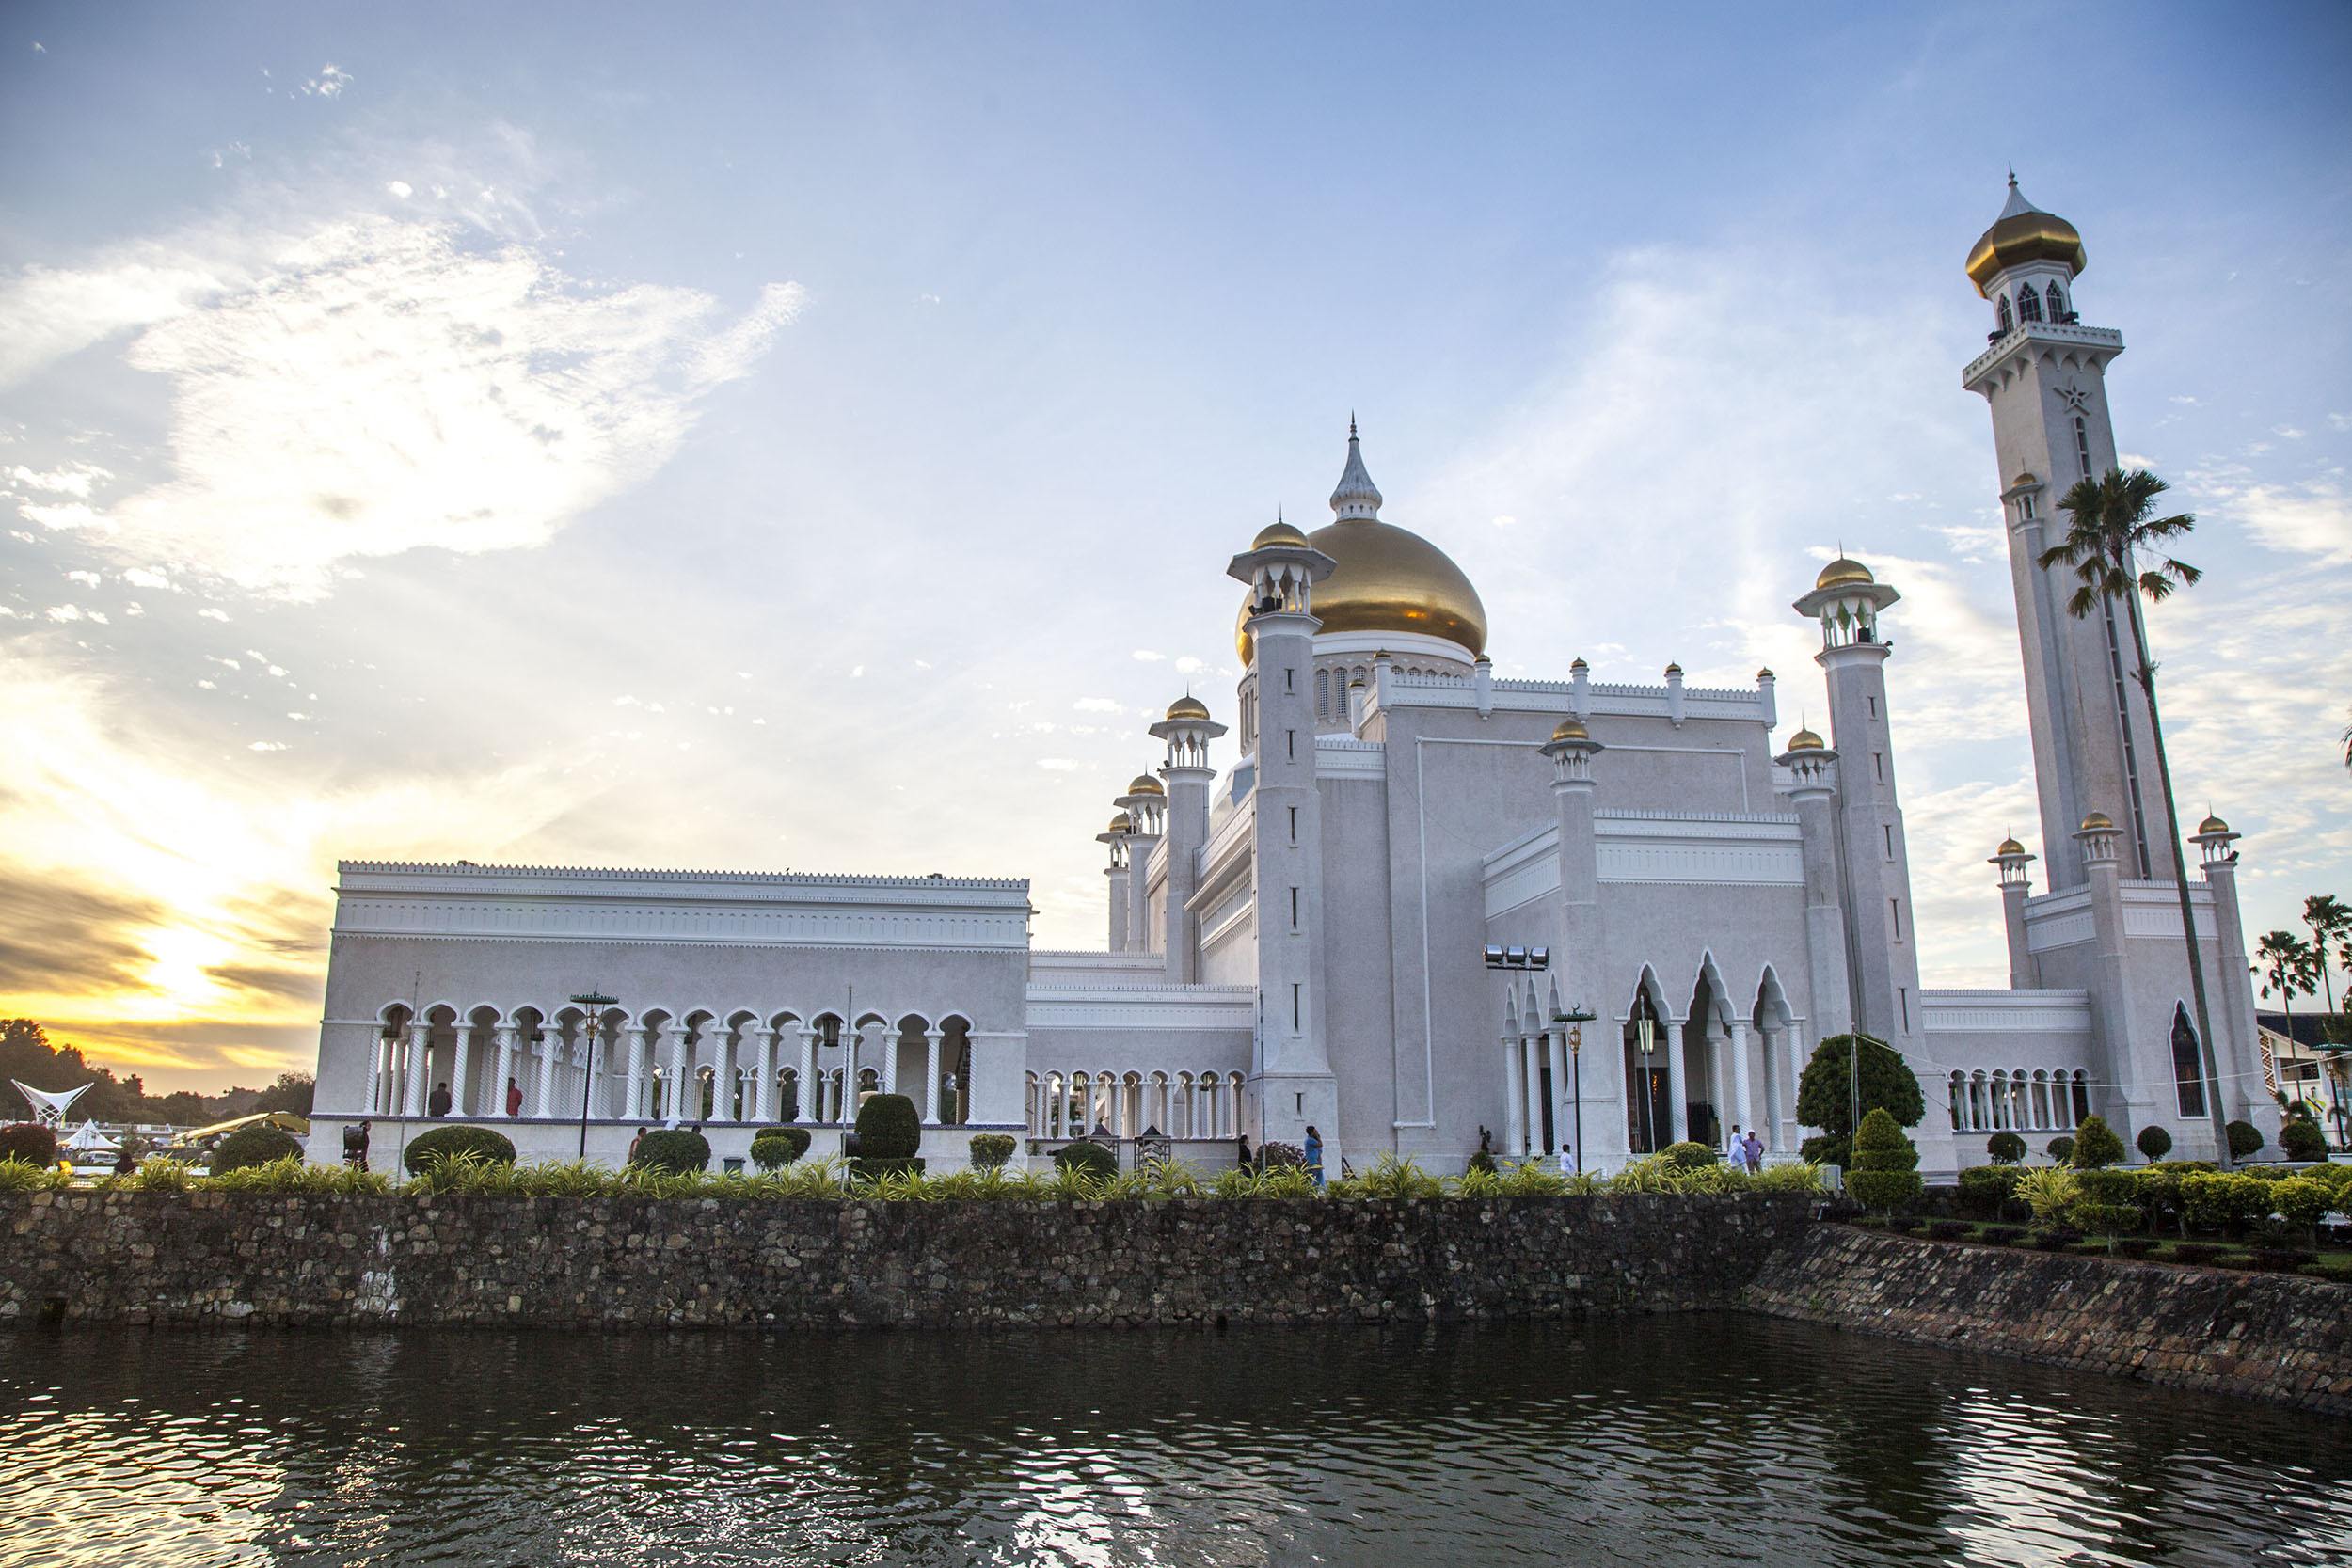 Masjid Omar Ali Saifuddien in Bandar Seri Begawan Brunei at sunset